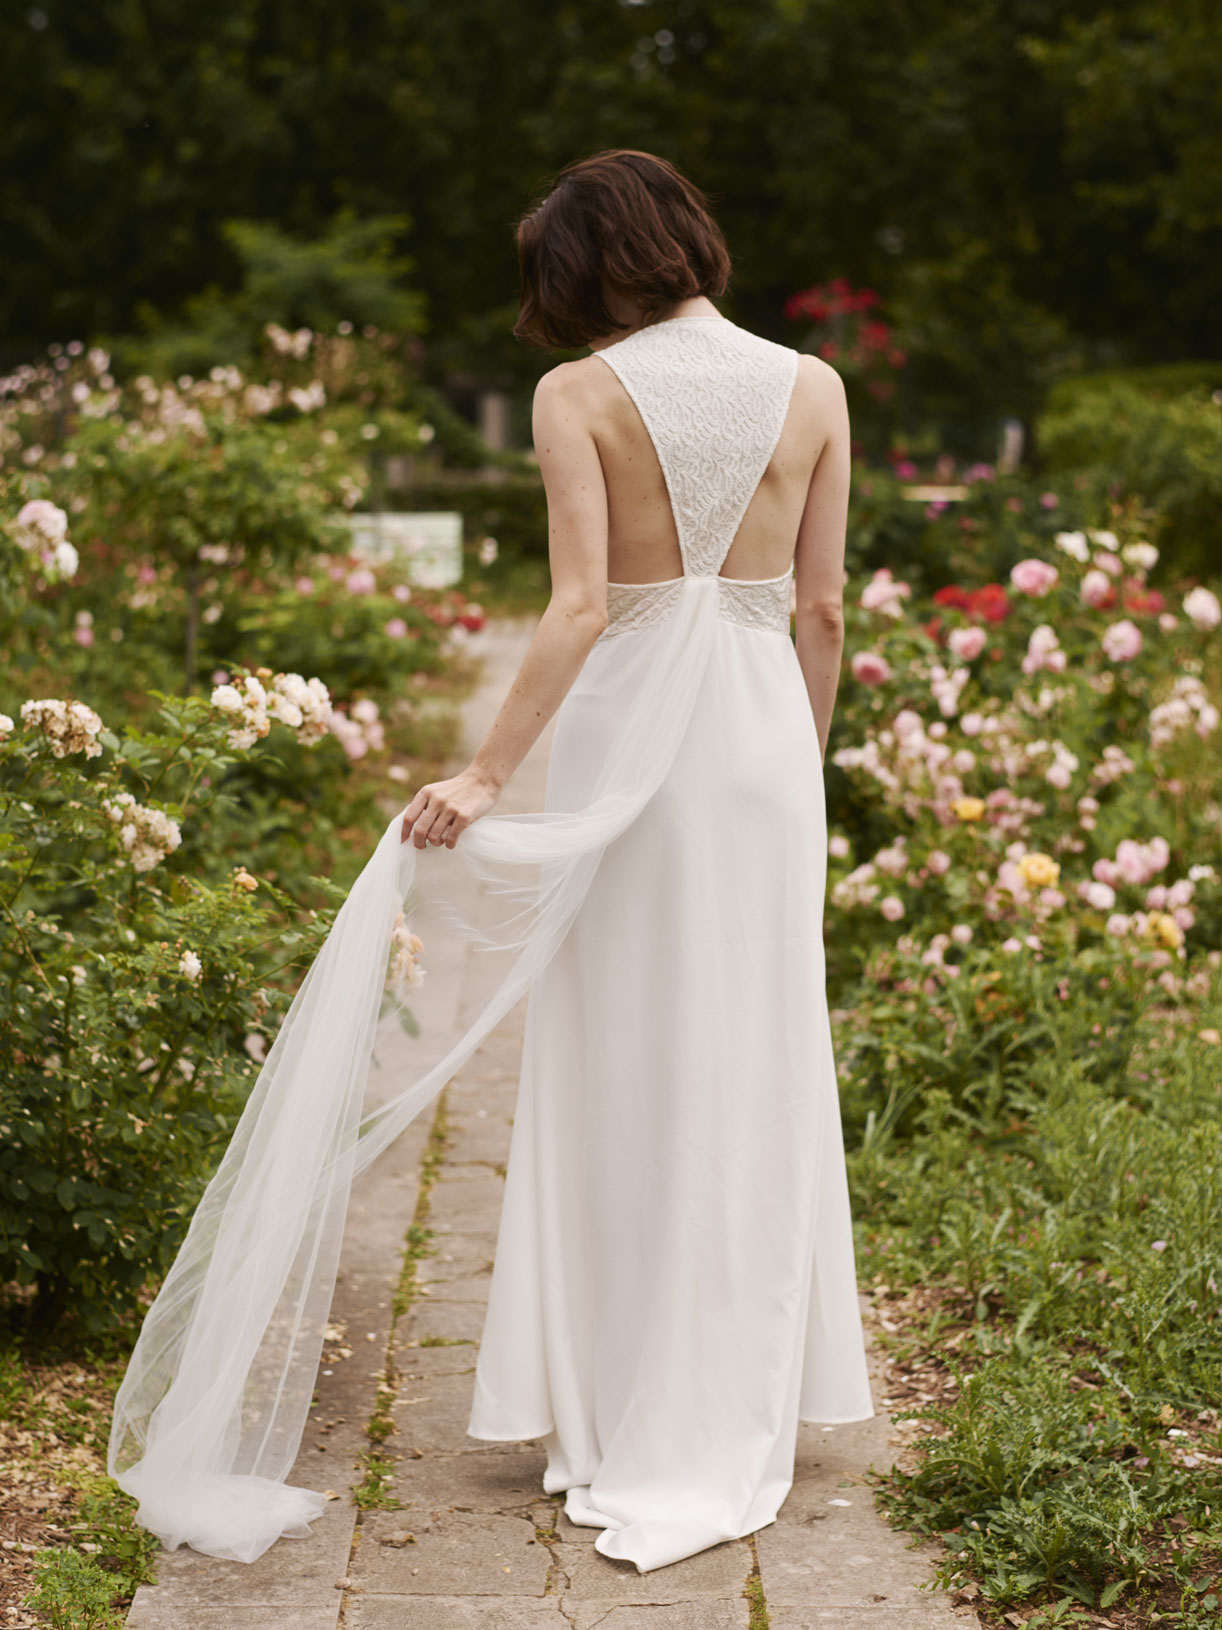 Créatrice de robe de mariée romantique sur-mesure recyclee - Myphilo